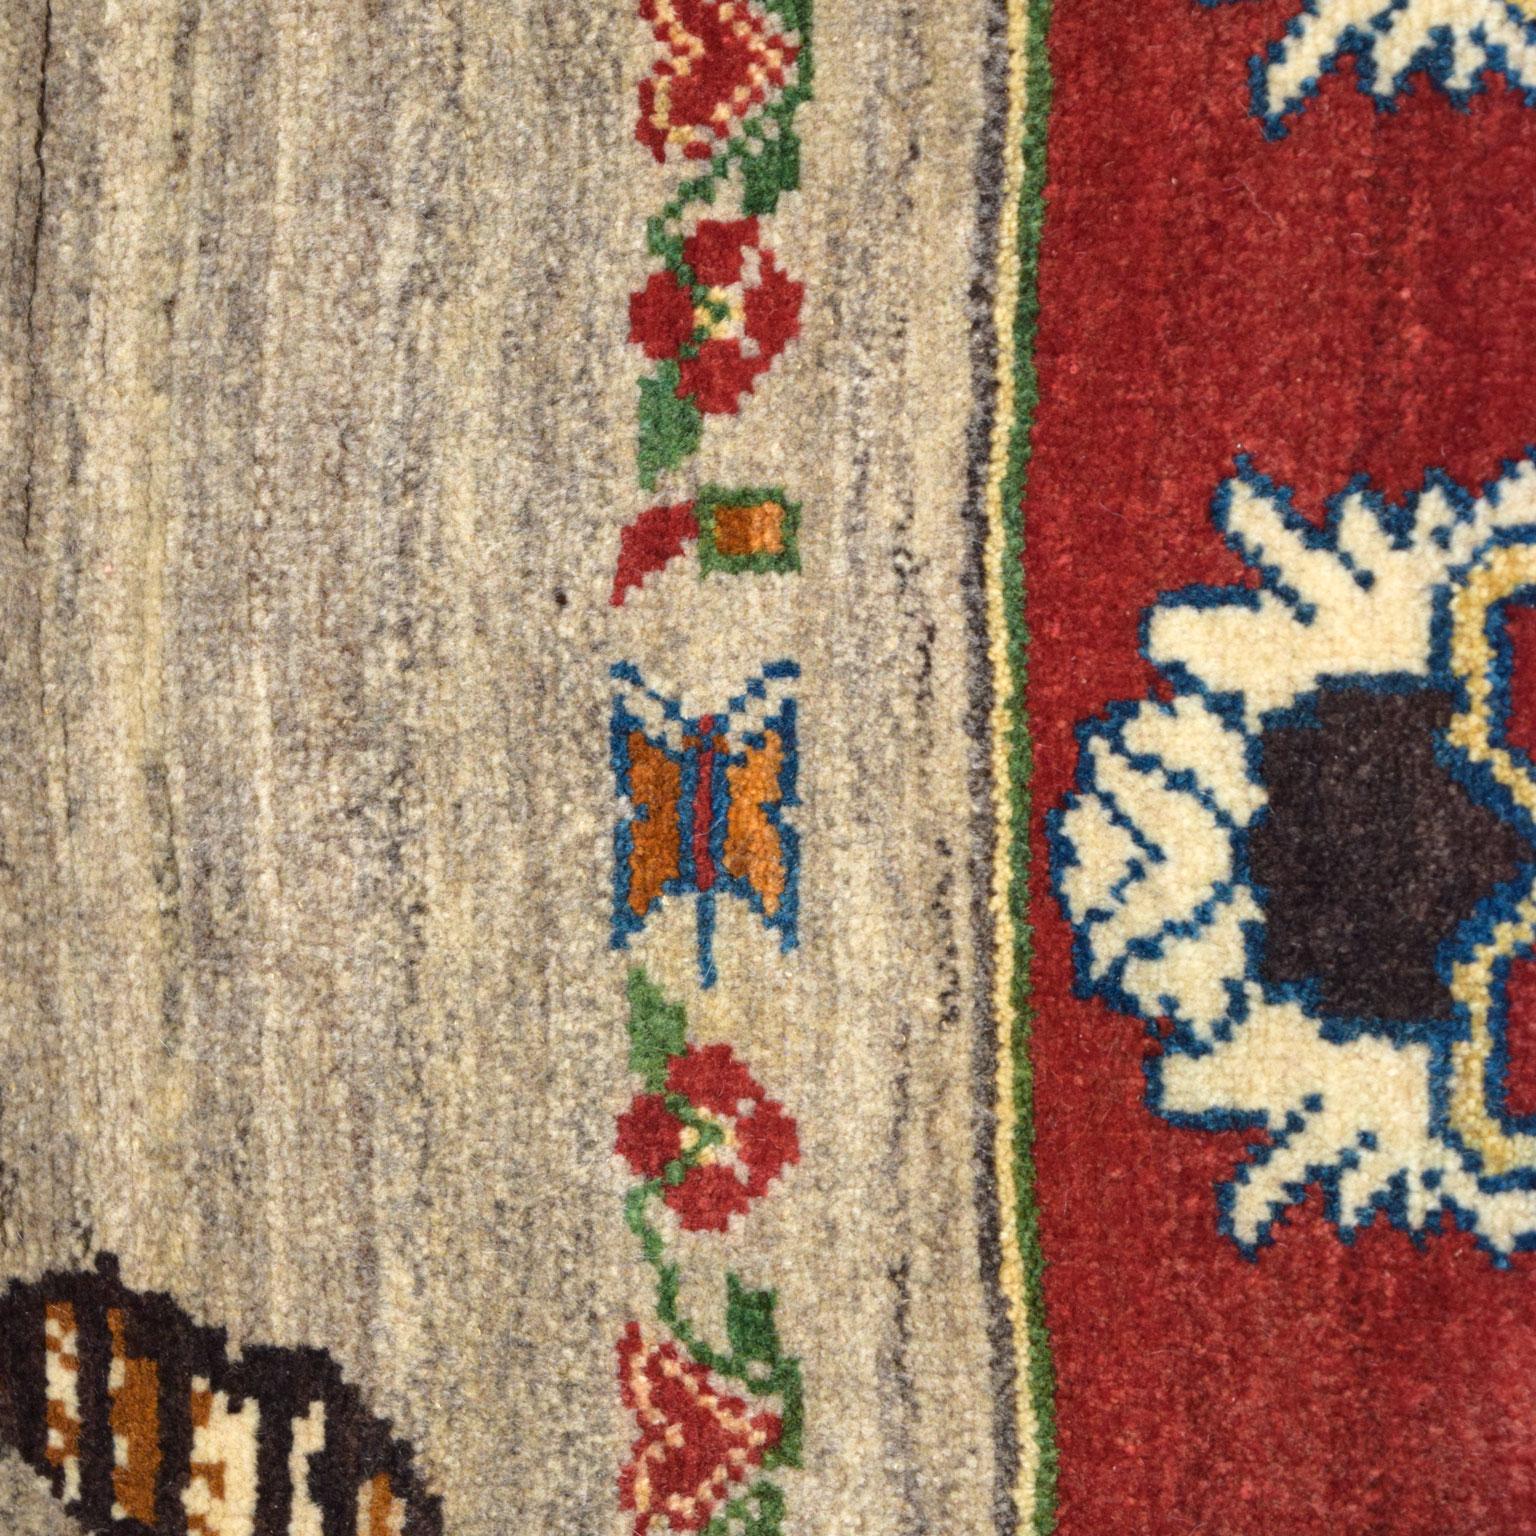 red persian rug